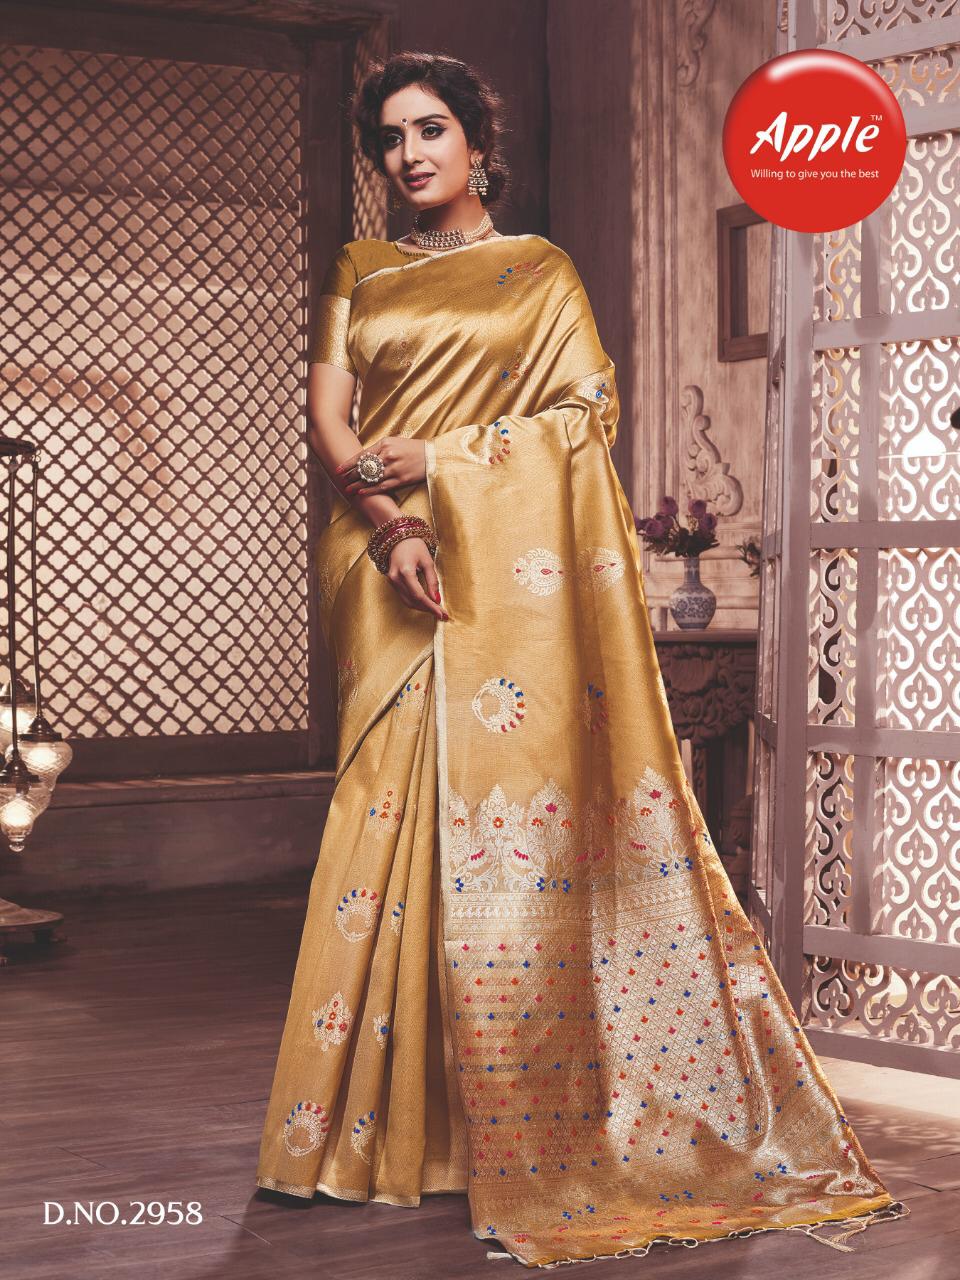 Apple Ghoomar vol 2 beautiful silk sarees collection